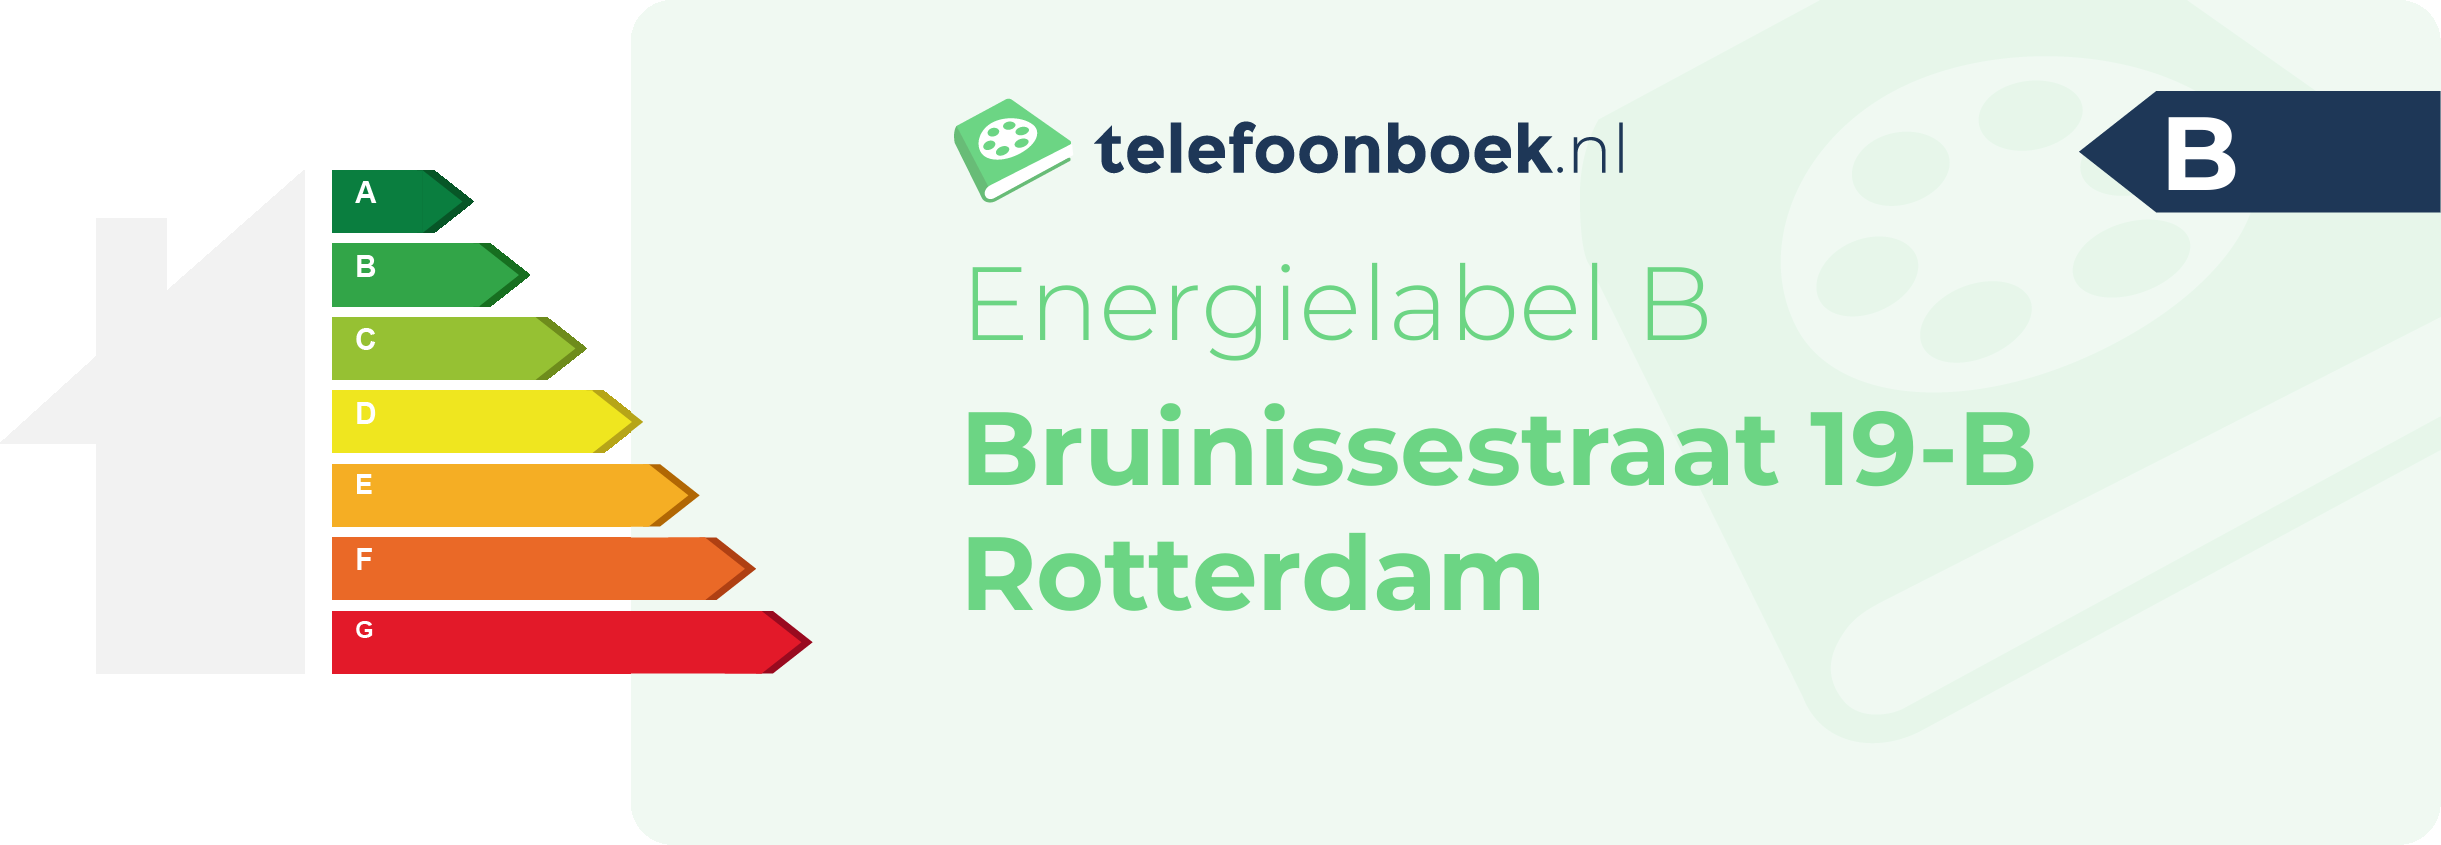 Energielabel Bruinissestraat 19-B Rotterdam